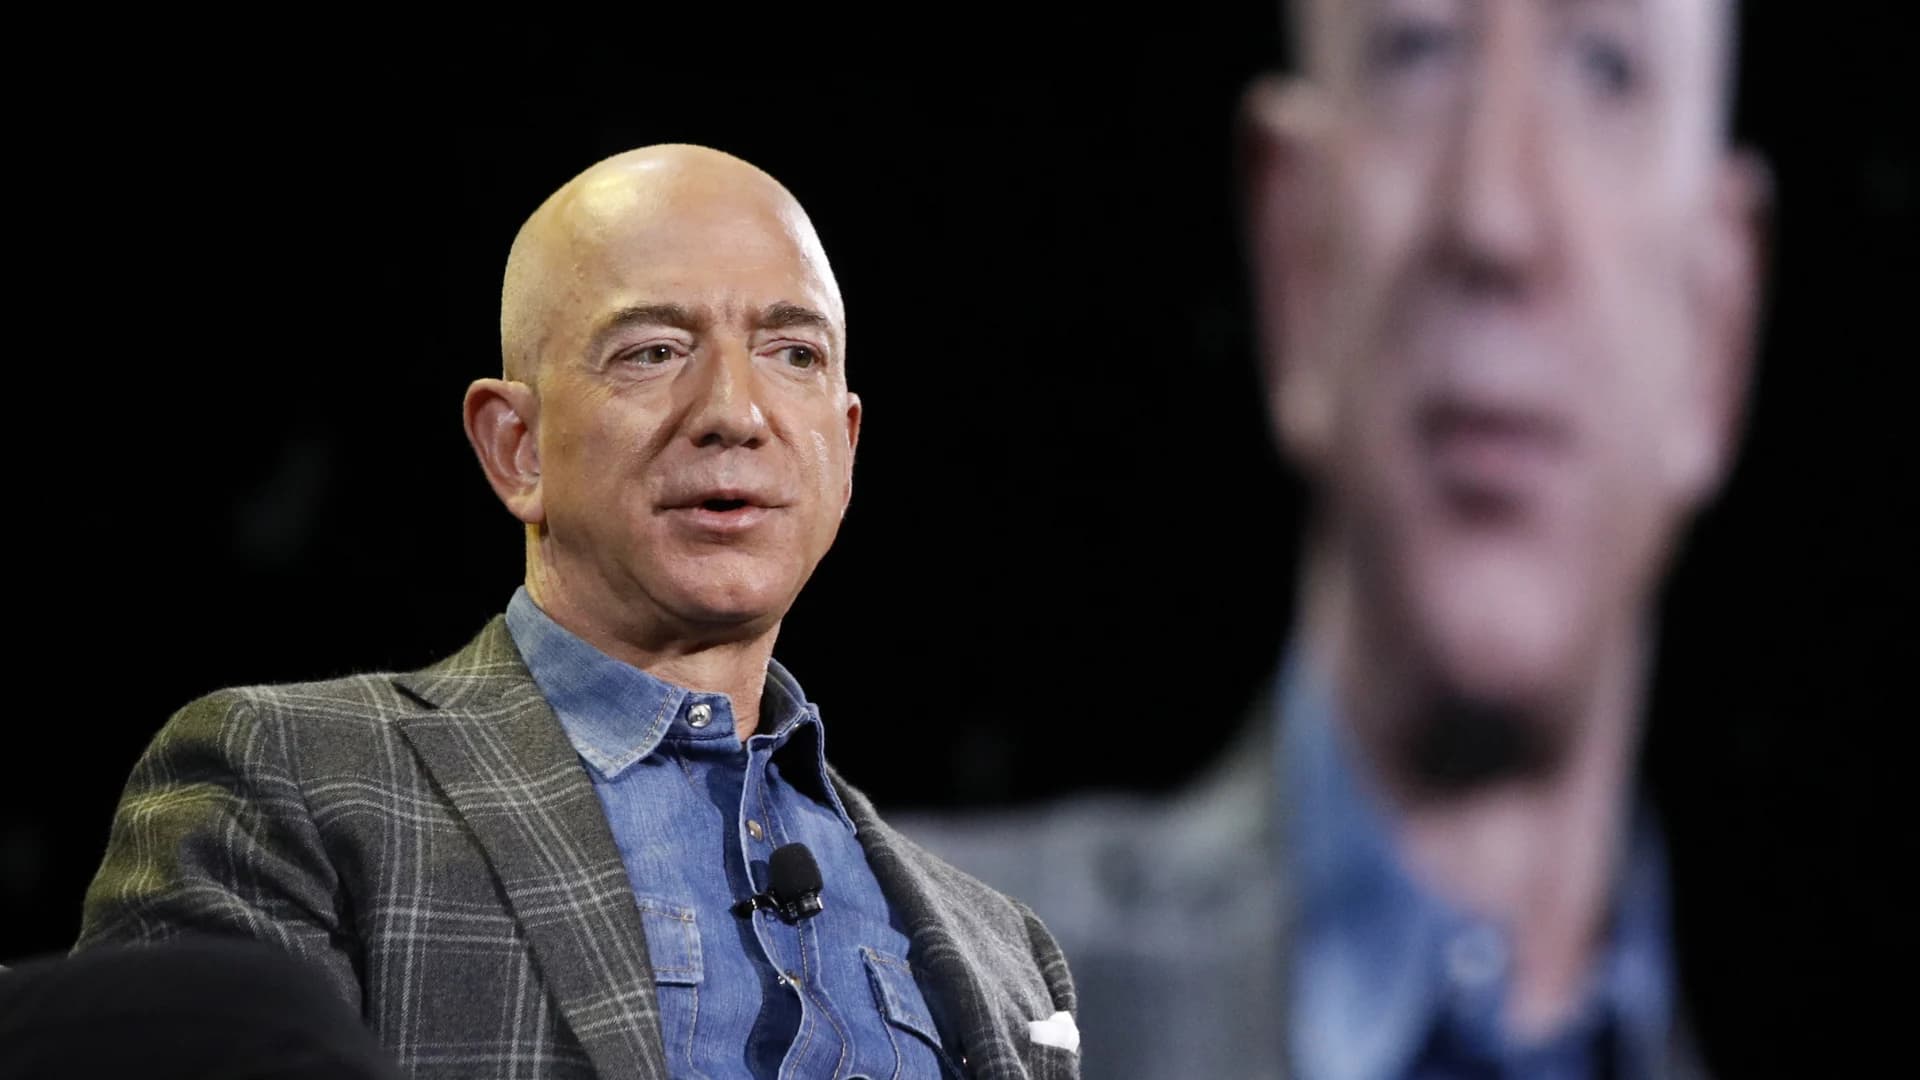 Jeff Bezos, Amazon's founder, will step down as CEO